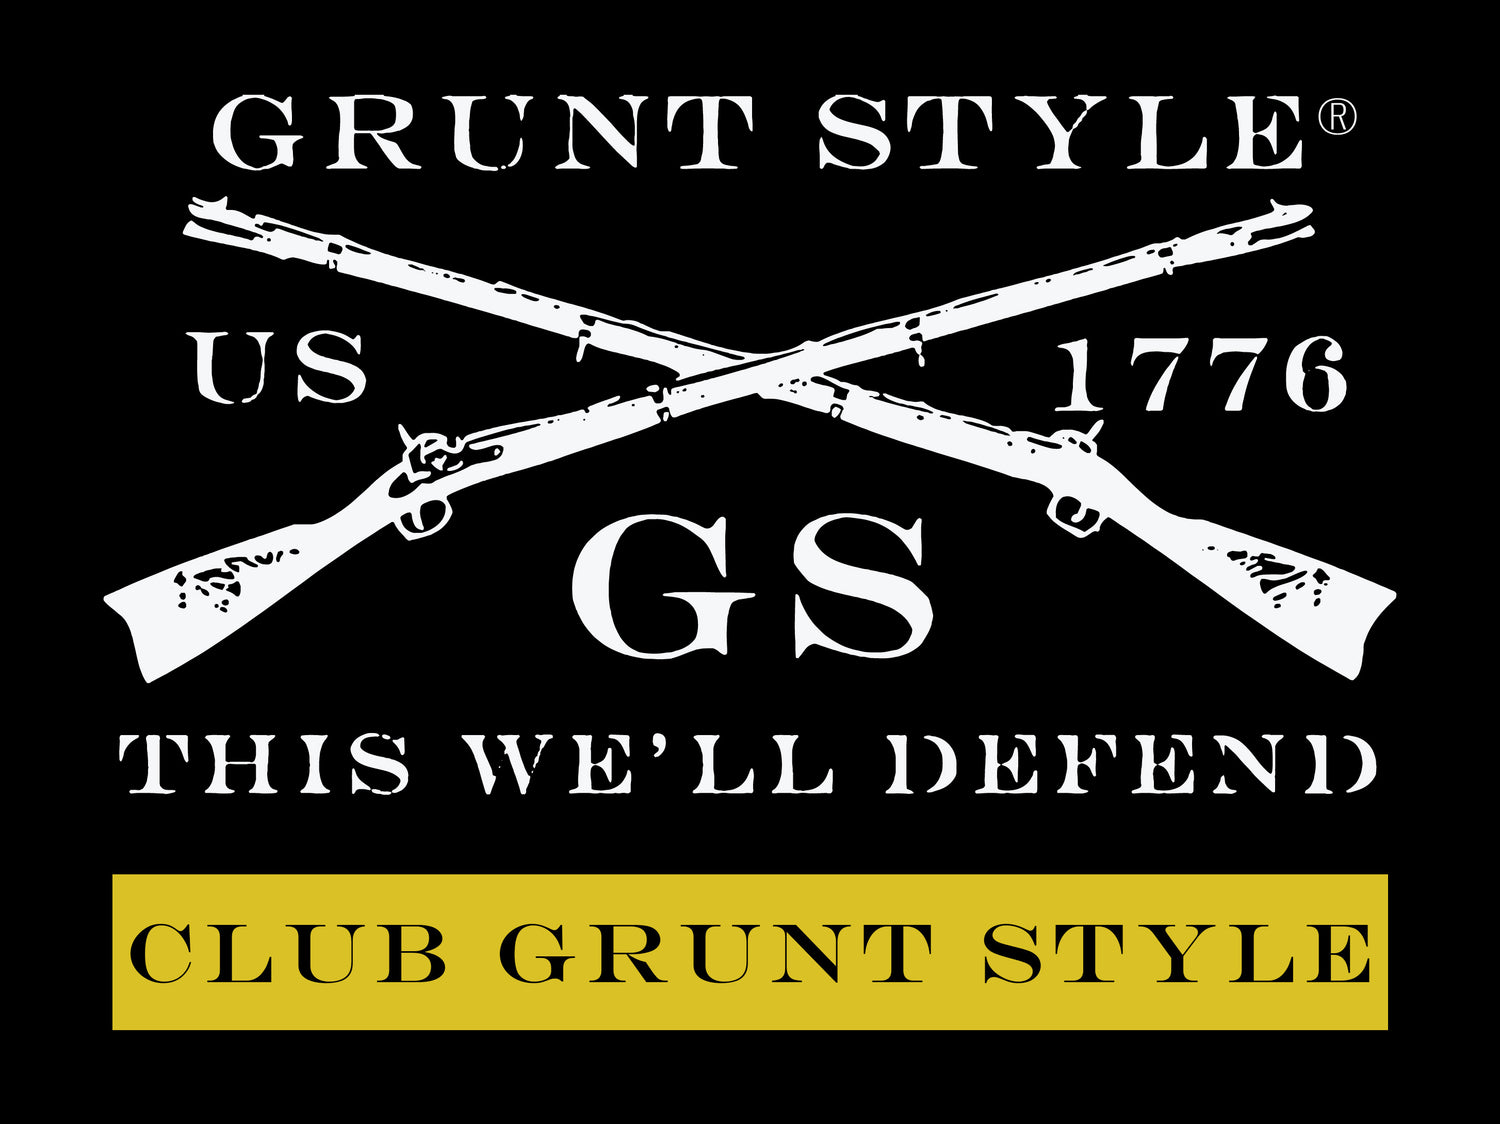 Club Grunt Style - Annually